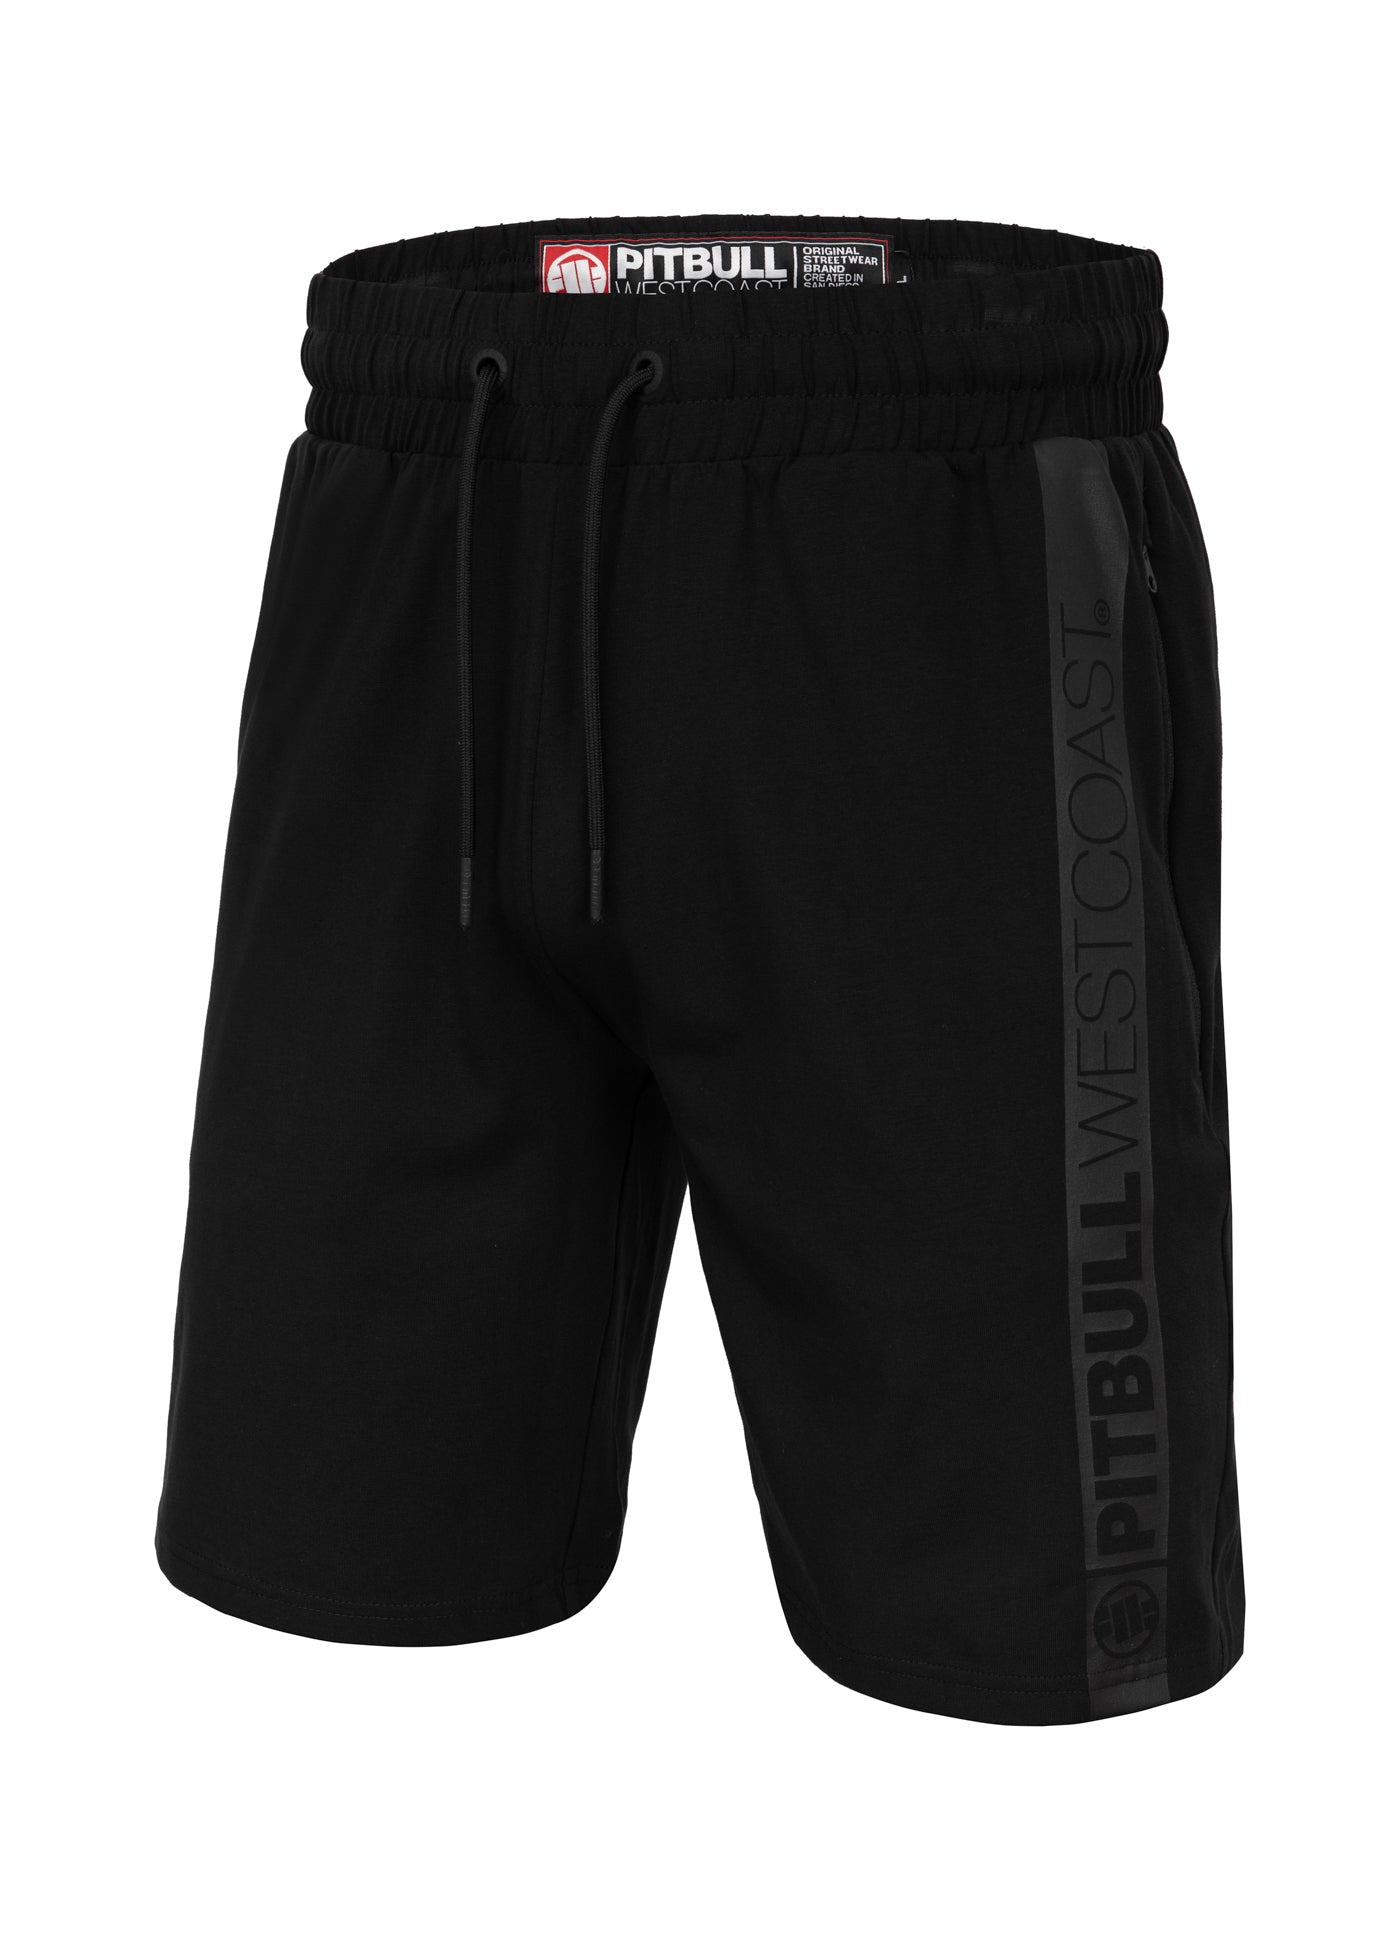 TARENTO 210 Black Shorts